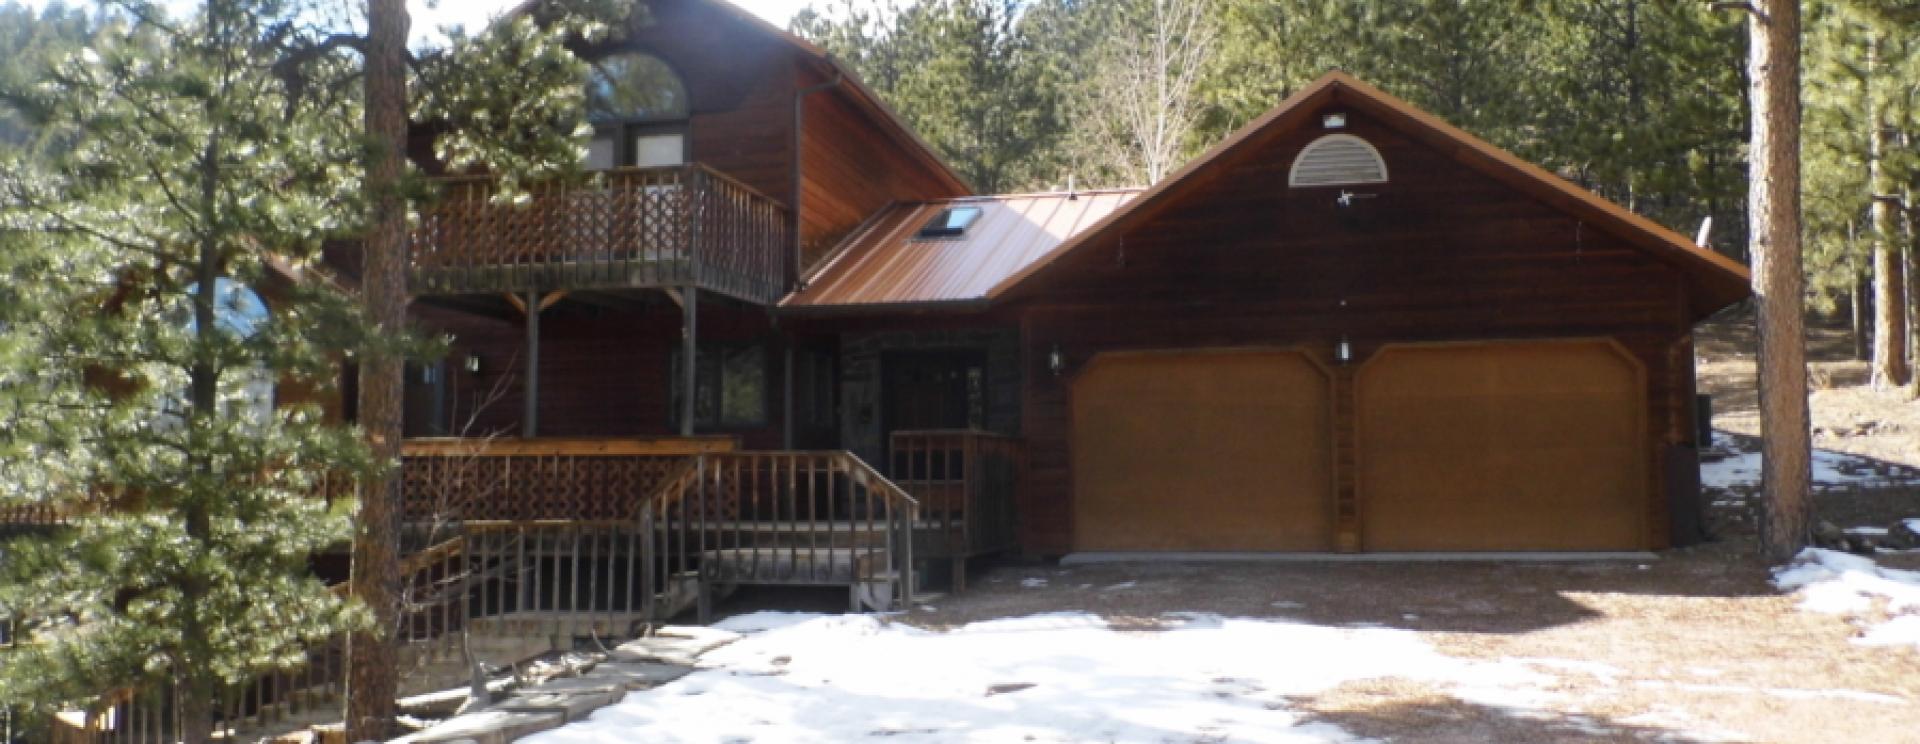 Edelweiss Mountain Lodge